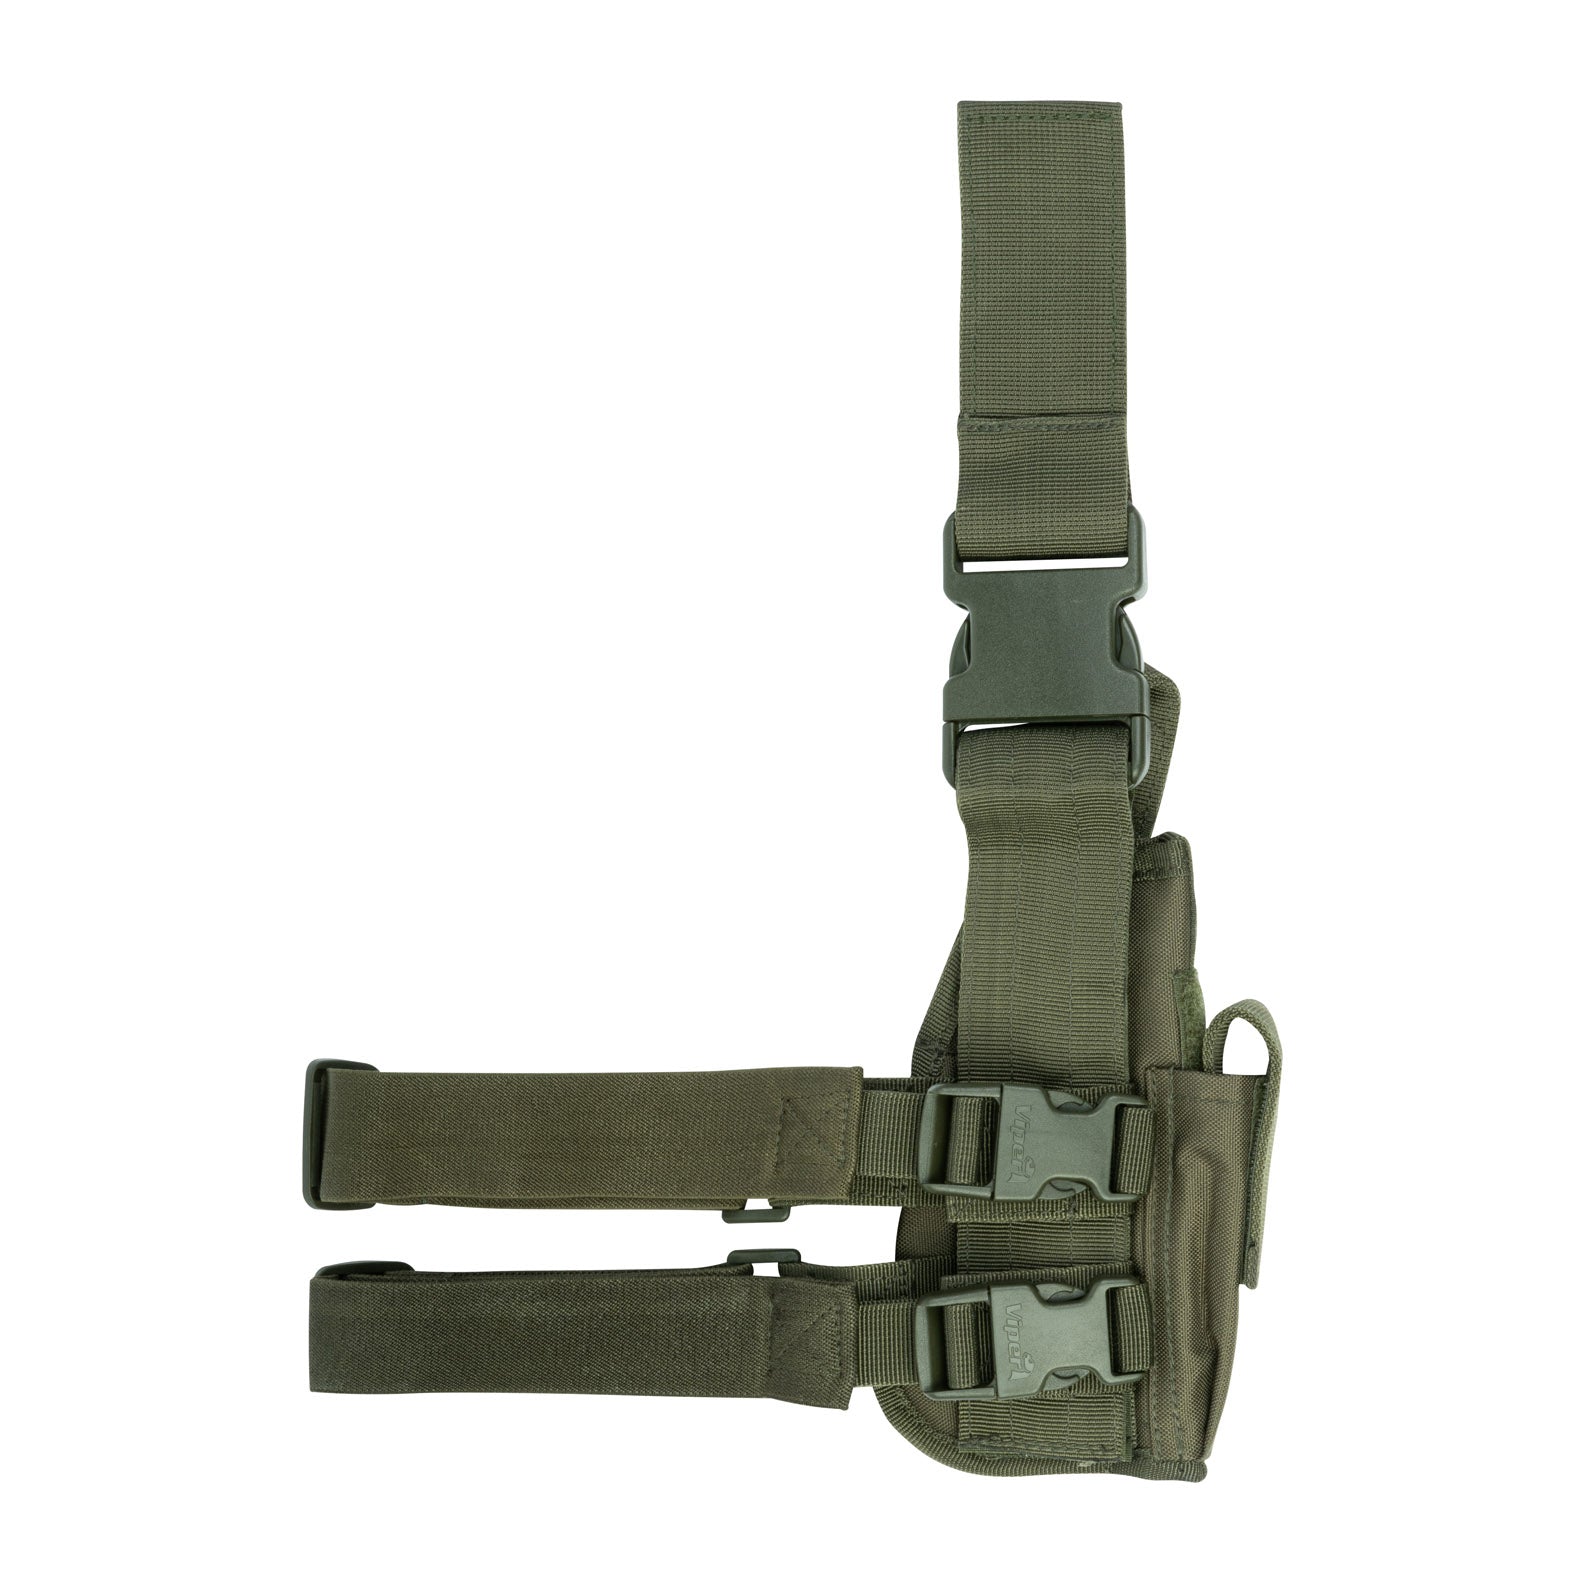 Viper Tactical - Adjustable Leg Holster Right Handed